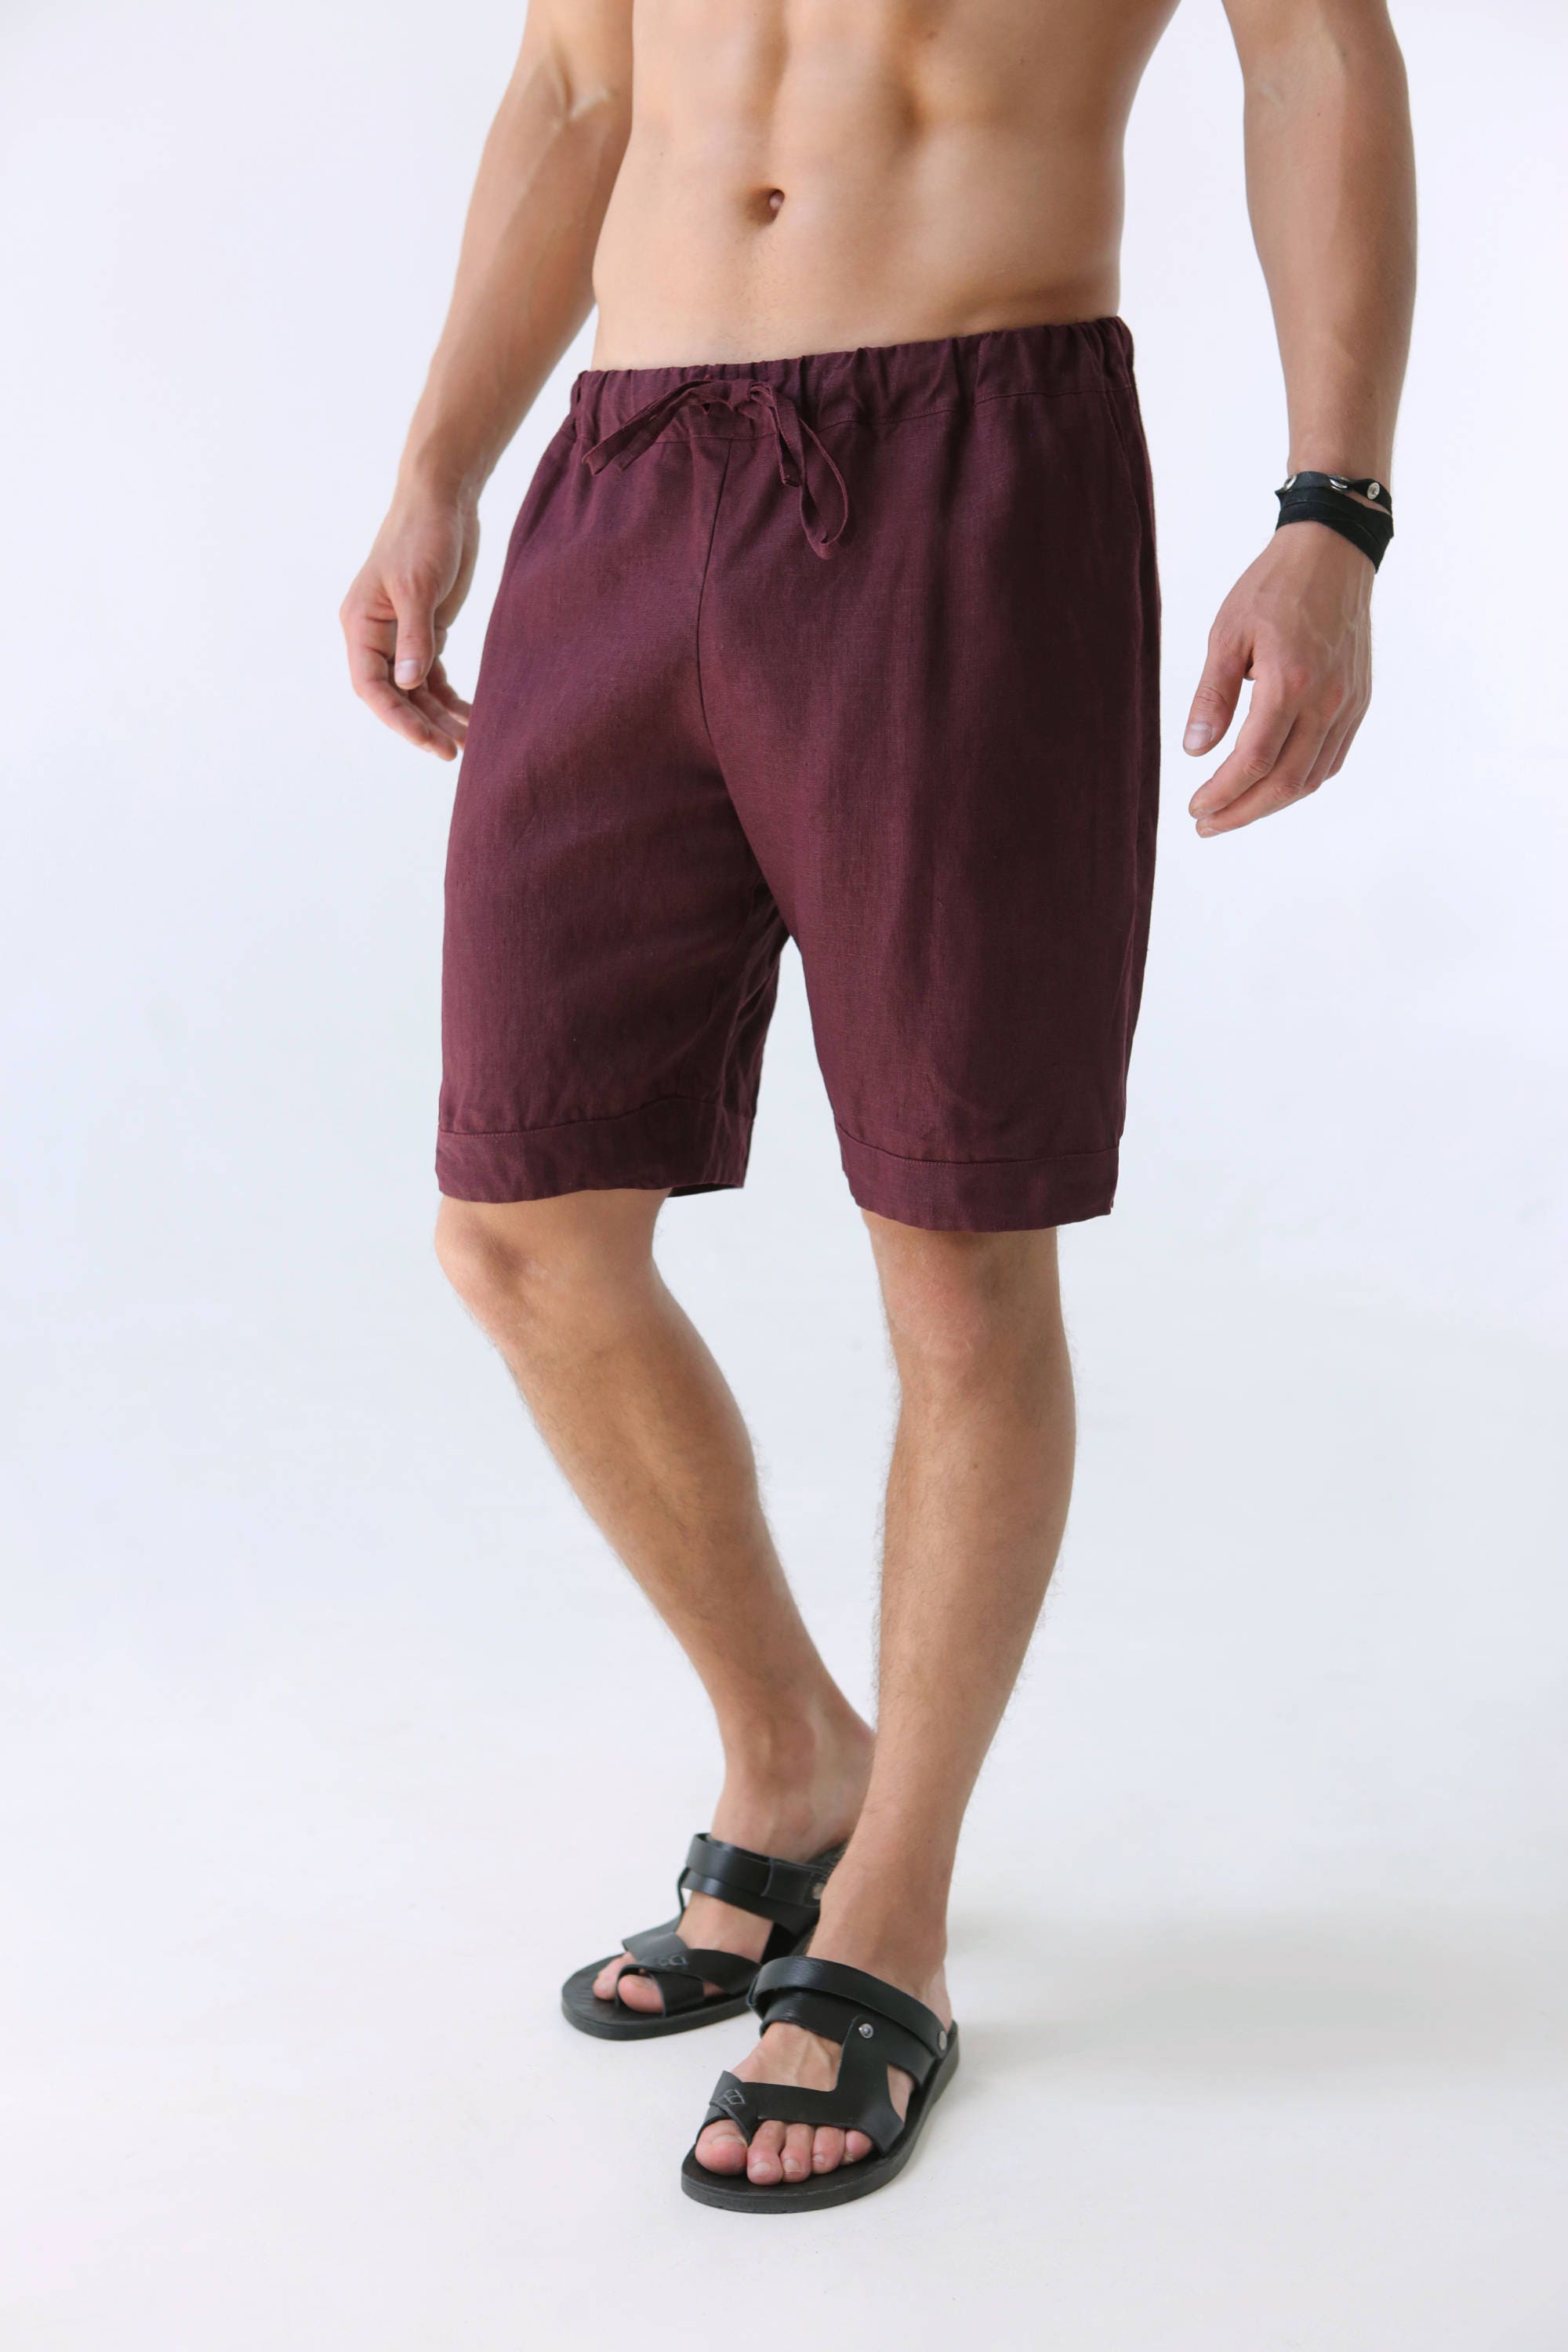 Mens Linen Shorts Shorts With Pockets Shorts for Men Summer - Etsy